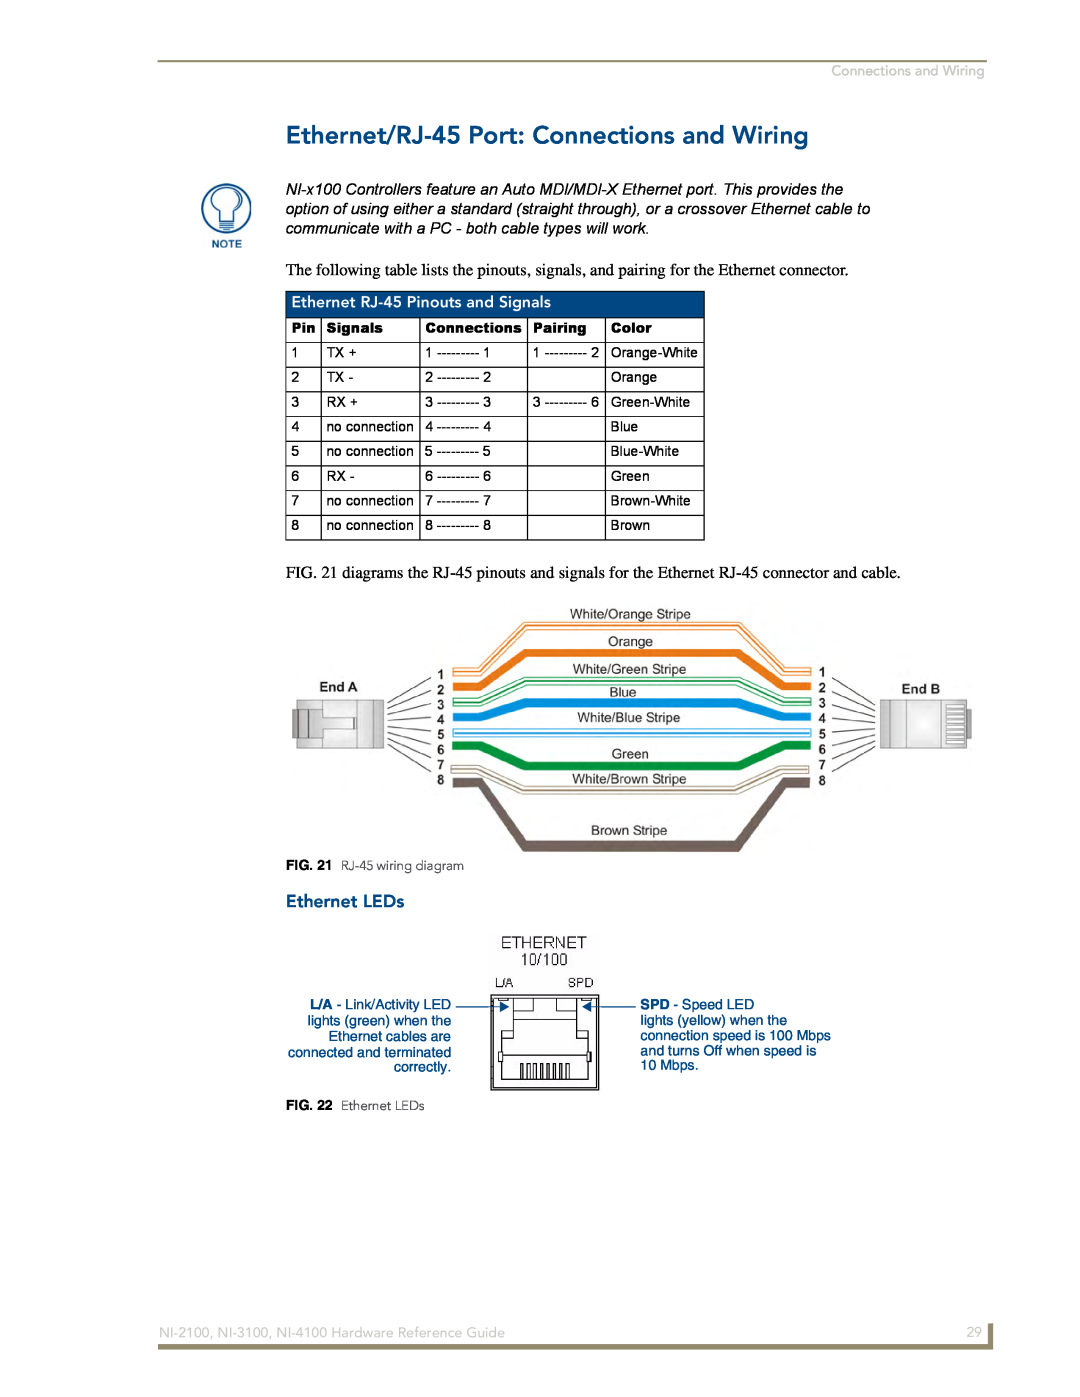 AMX NI-4100, NI-3100, NI-2100 manual Ethernet/RJ-45 Port Connections and Wiring, Ethernet LEDs 